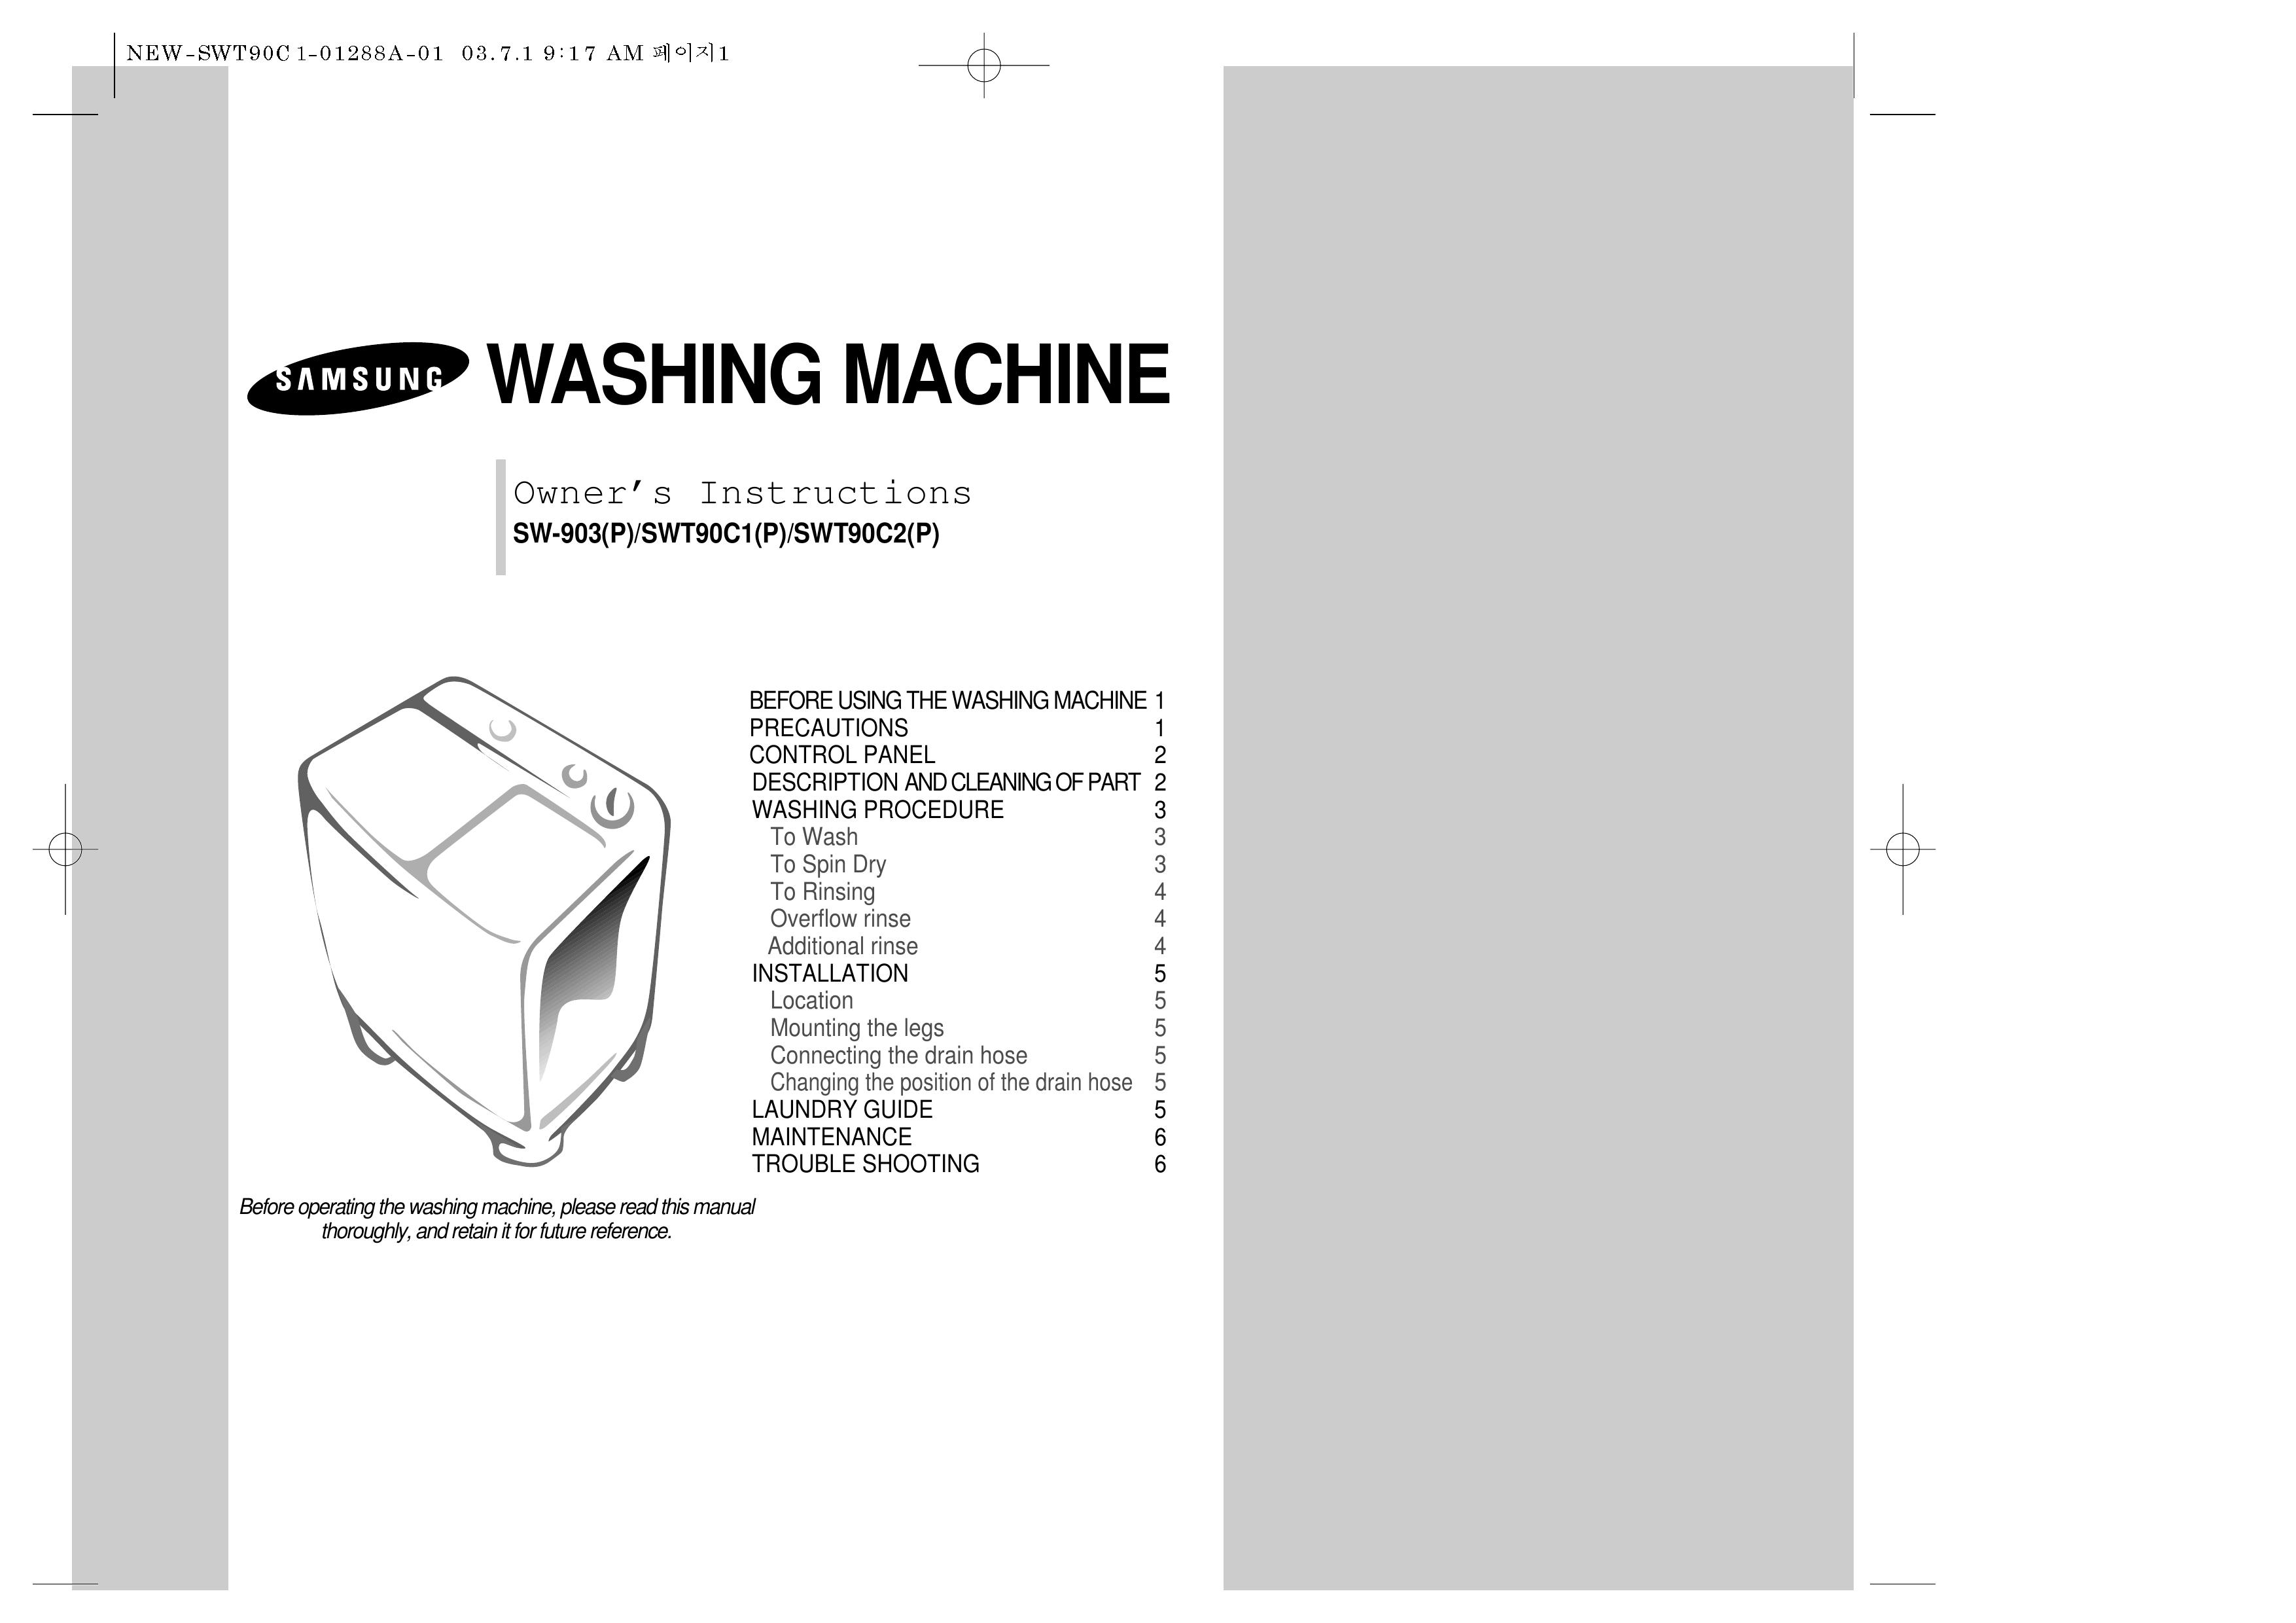 Samsung SW-903(P) Washer/Dryer User Manual